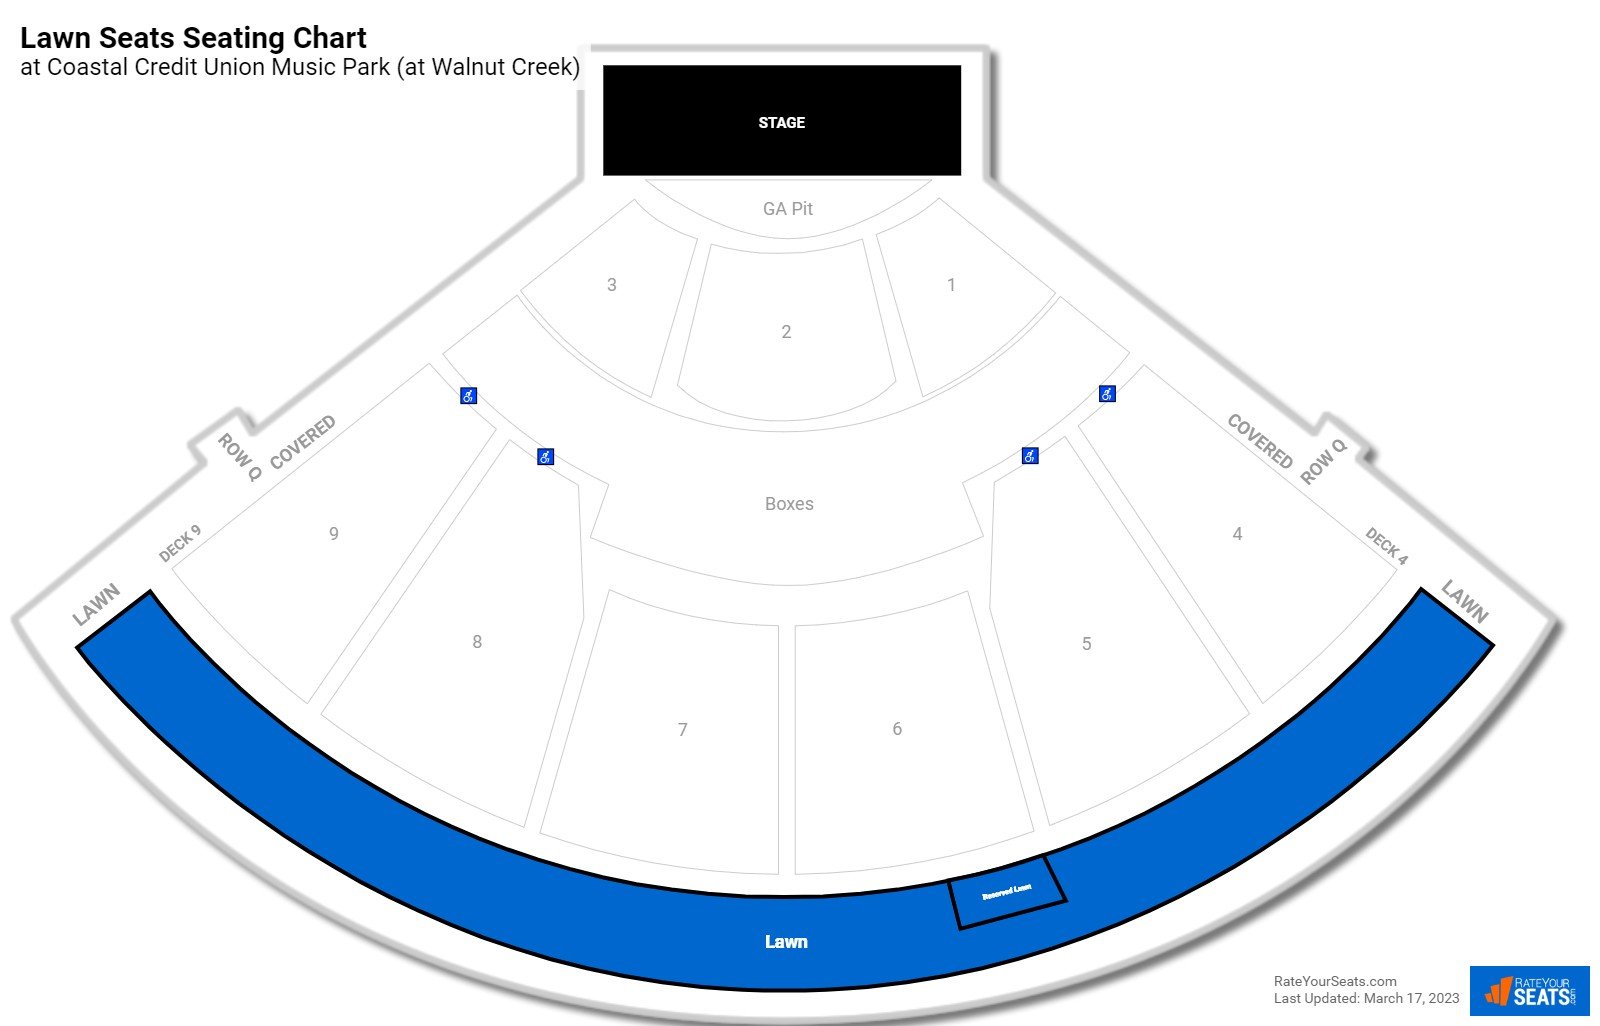 Concert Lawn Seats Seating Chart at Coastal Credit Union Music Park (at Walnut Creek)